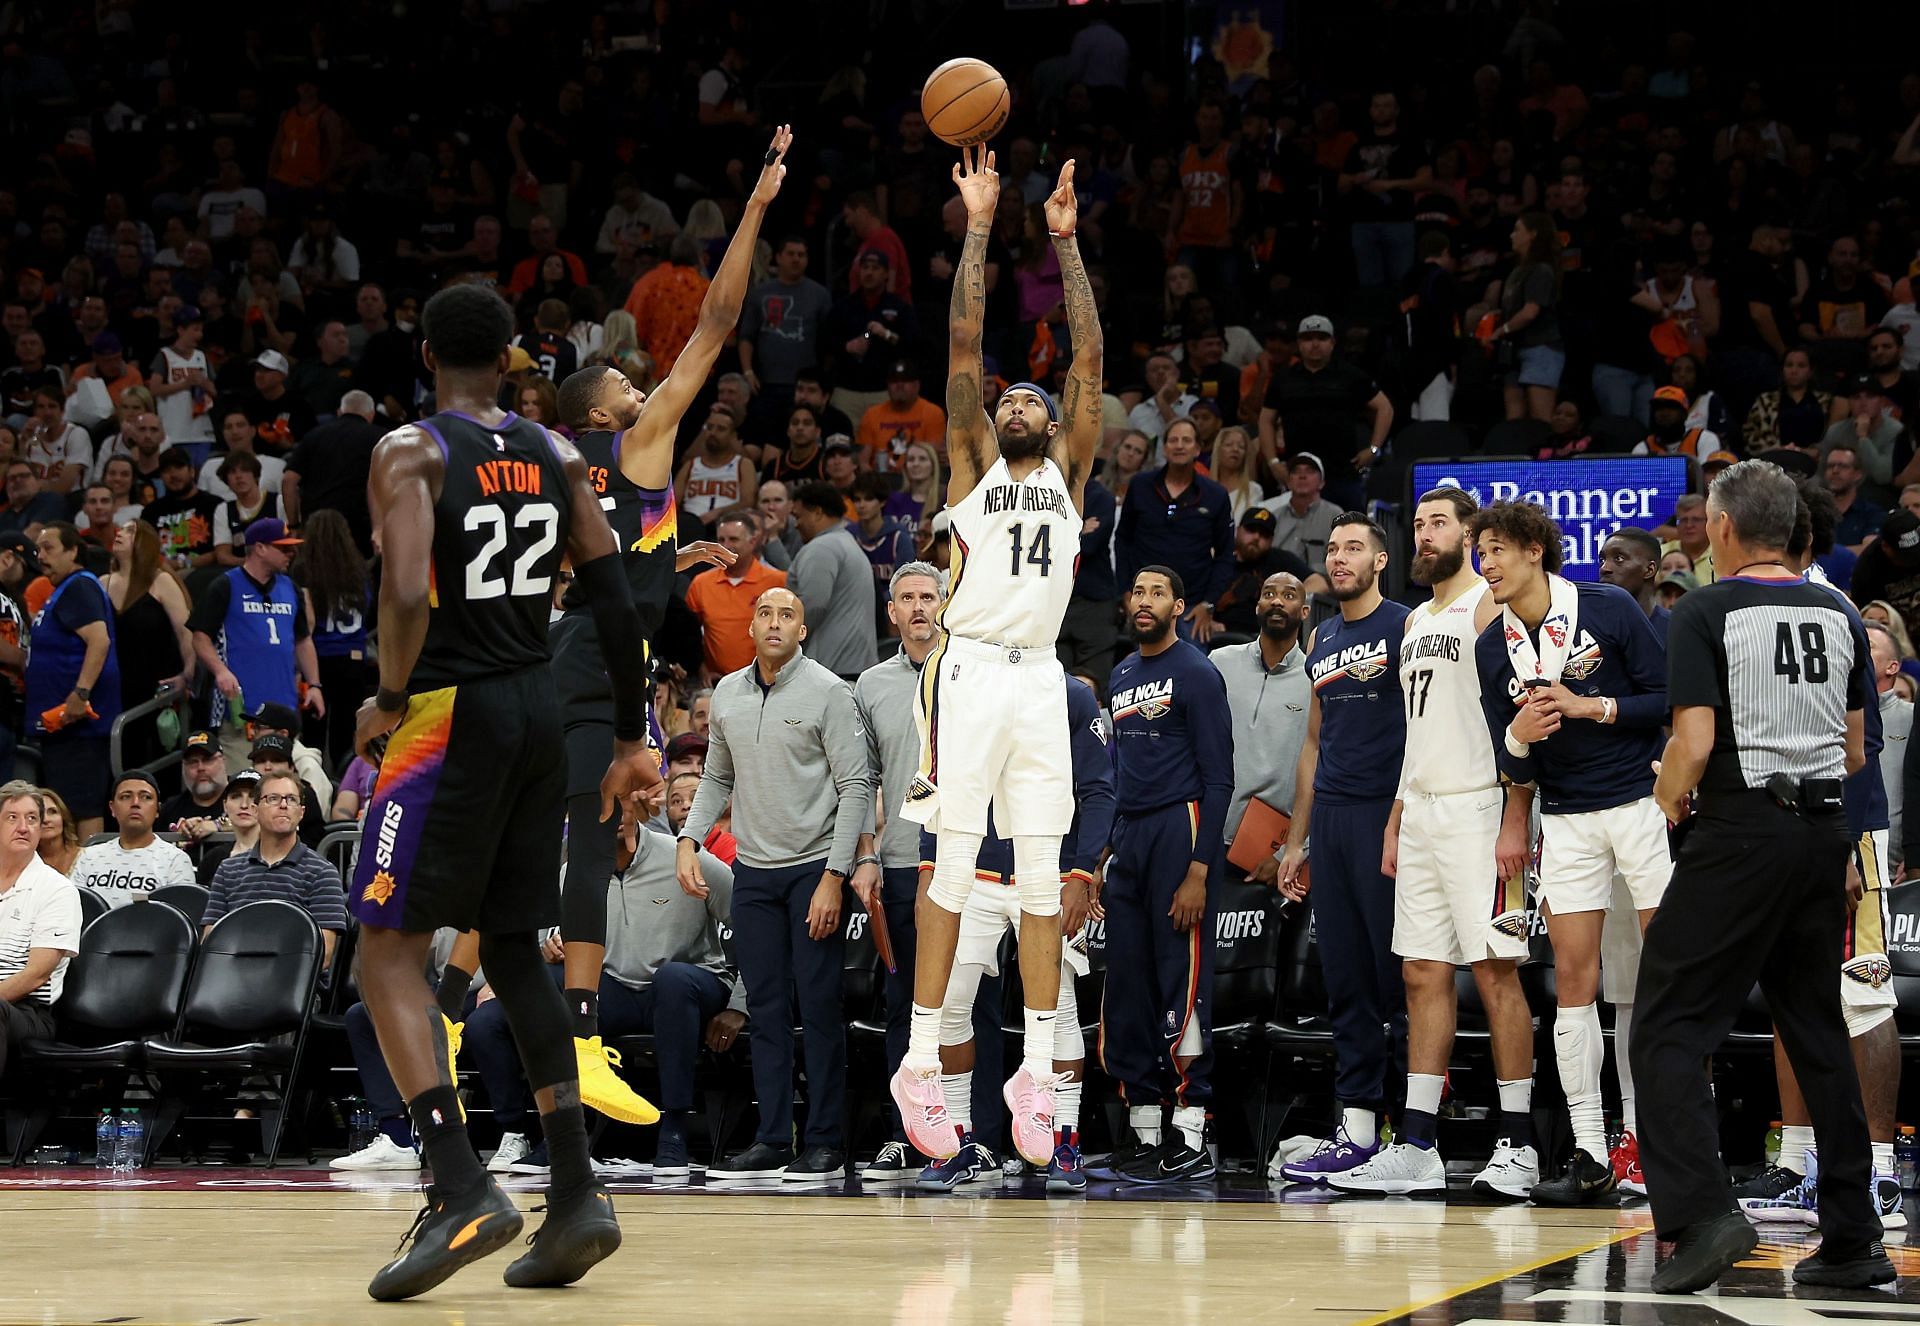 New Orleans Pelicans vs. Phoenix Suns - Game 2; Brandon Ingram shoots a three.